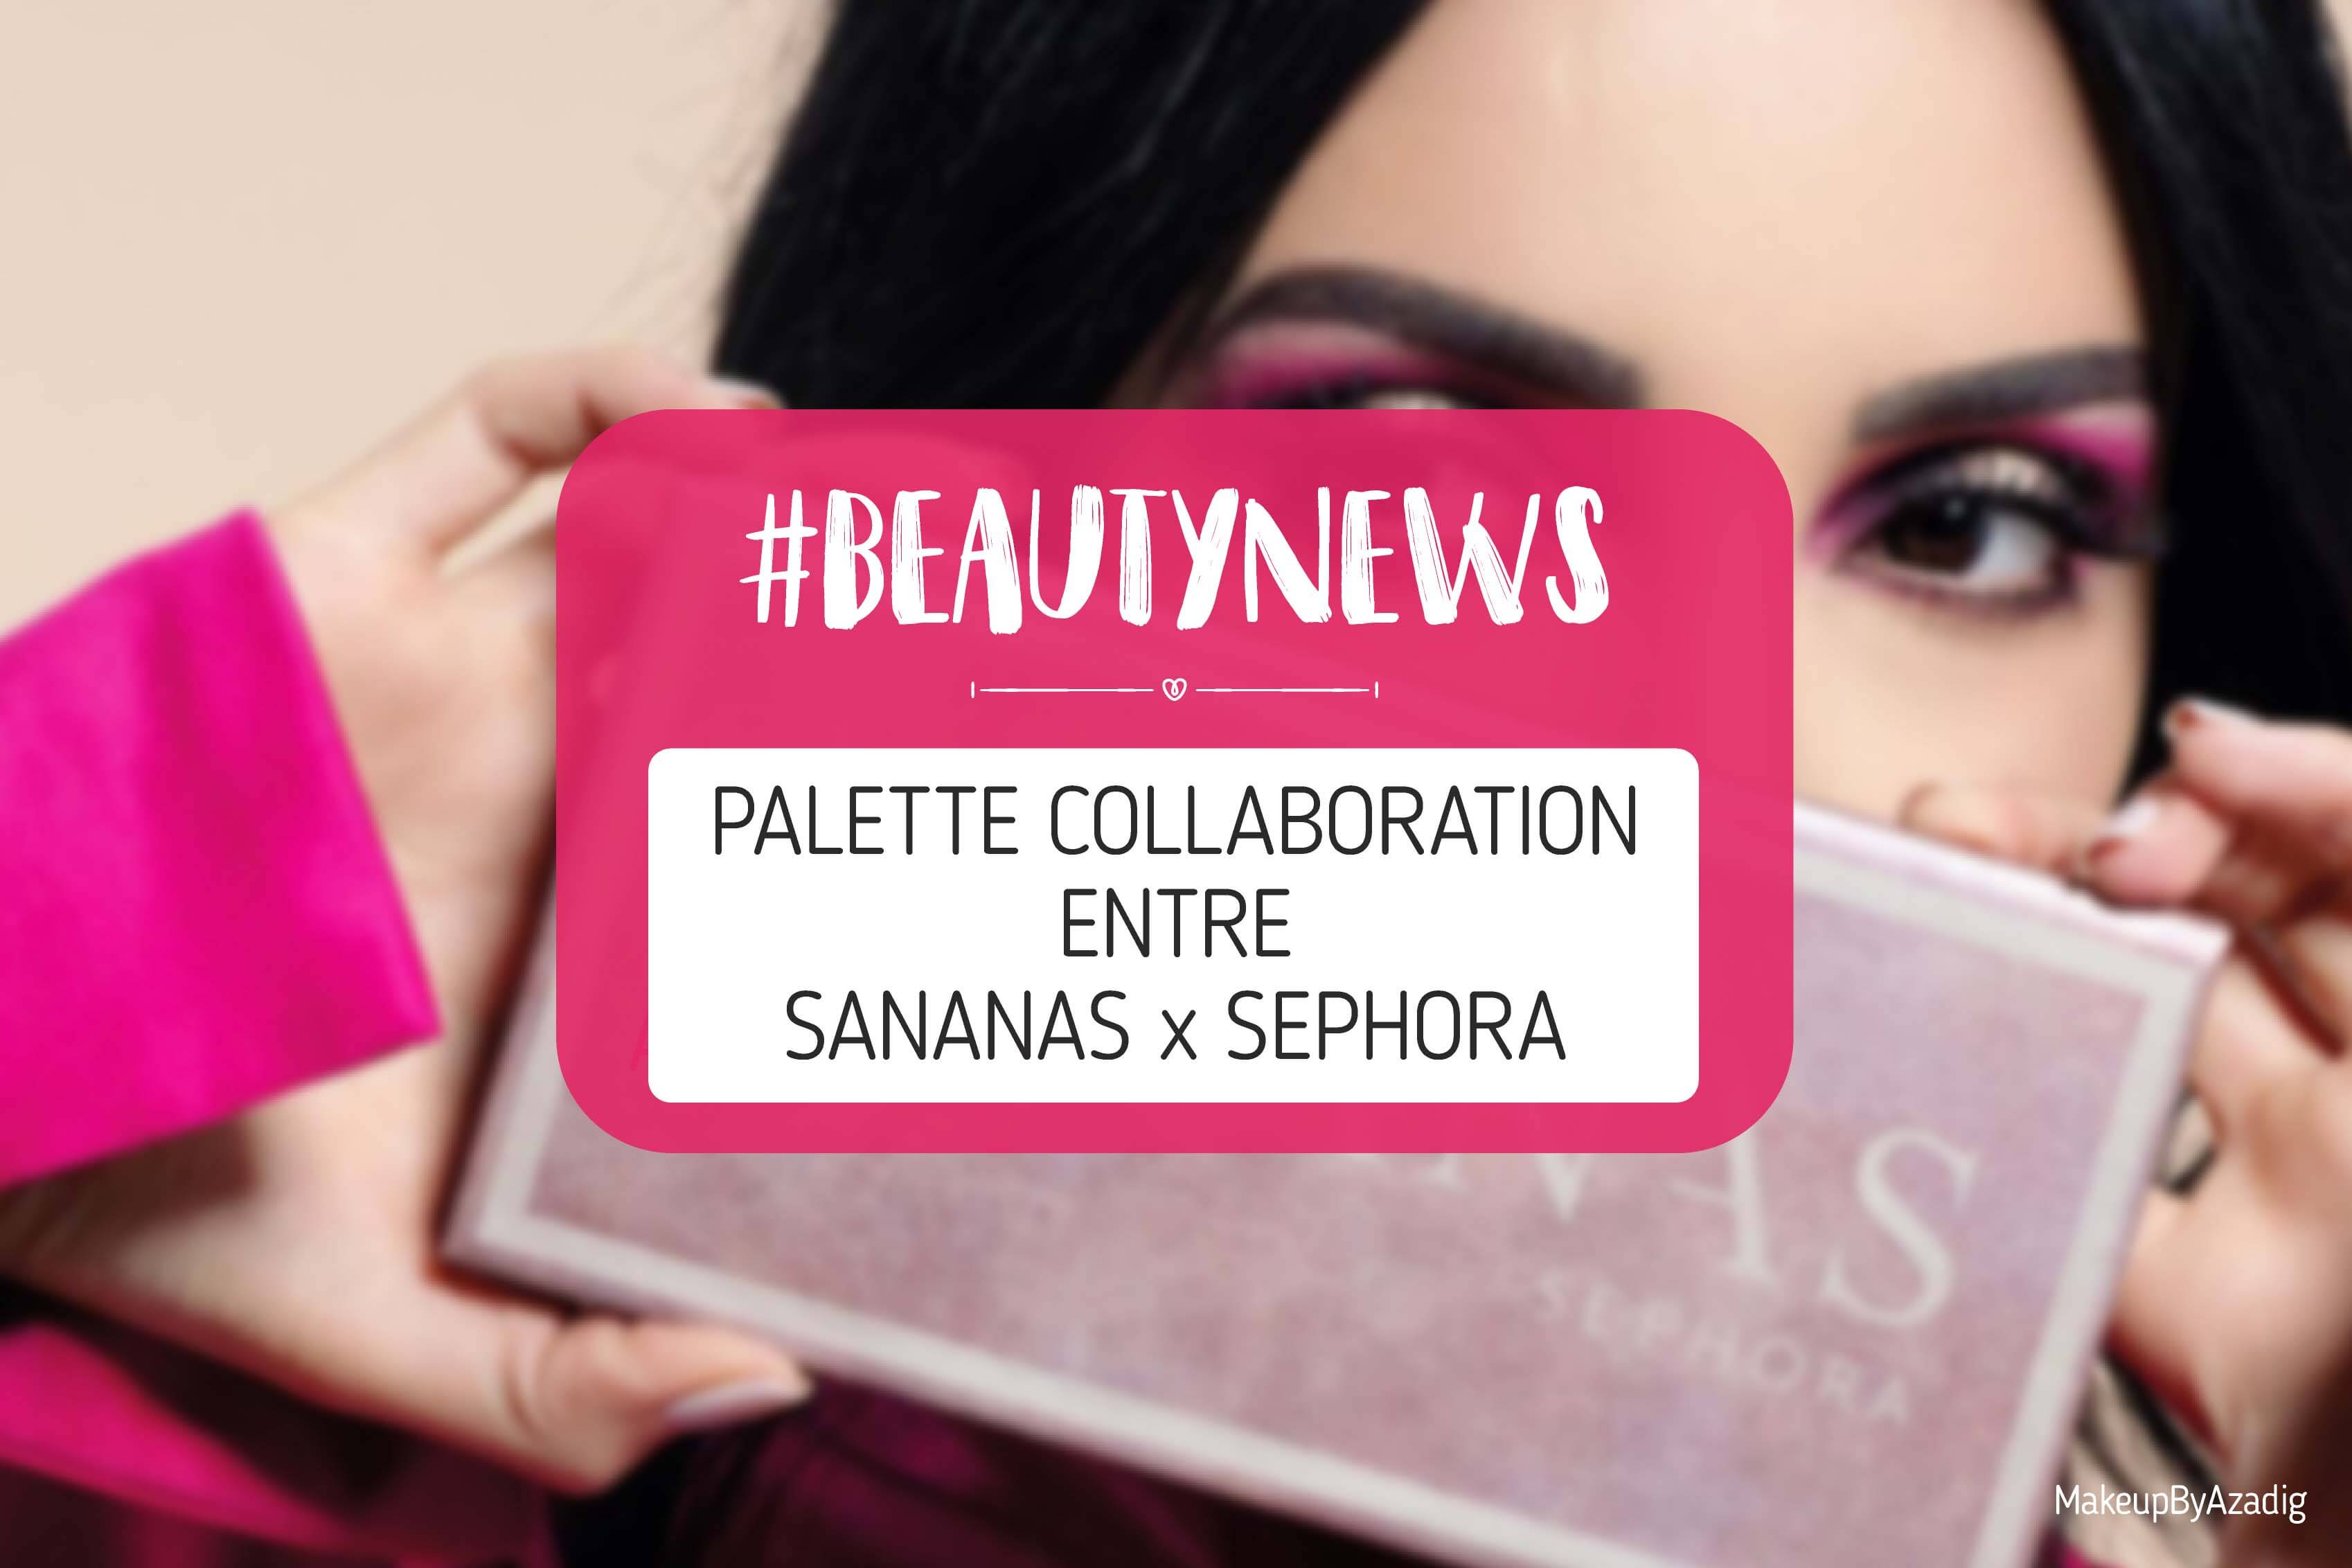 revue-palette-collaboration-sananas-sephora-france-teintes-fards-paupieres-couleurs-avis-prix-swatch-makeupbyazadig-date-sortie-beautynews-miniature